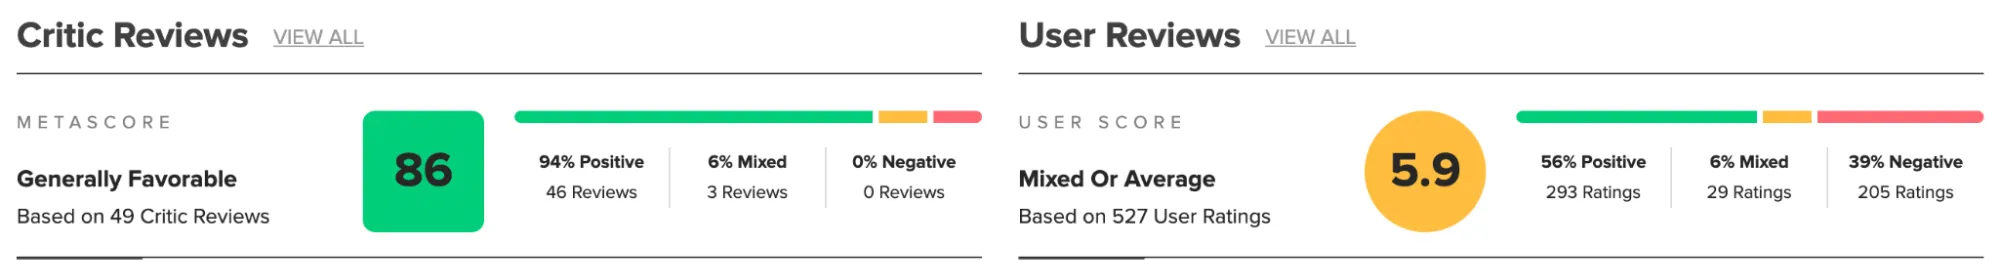 Metacritic MK1 results